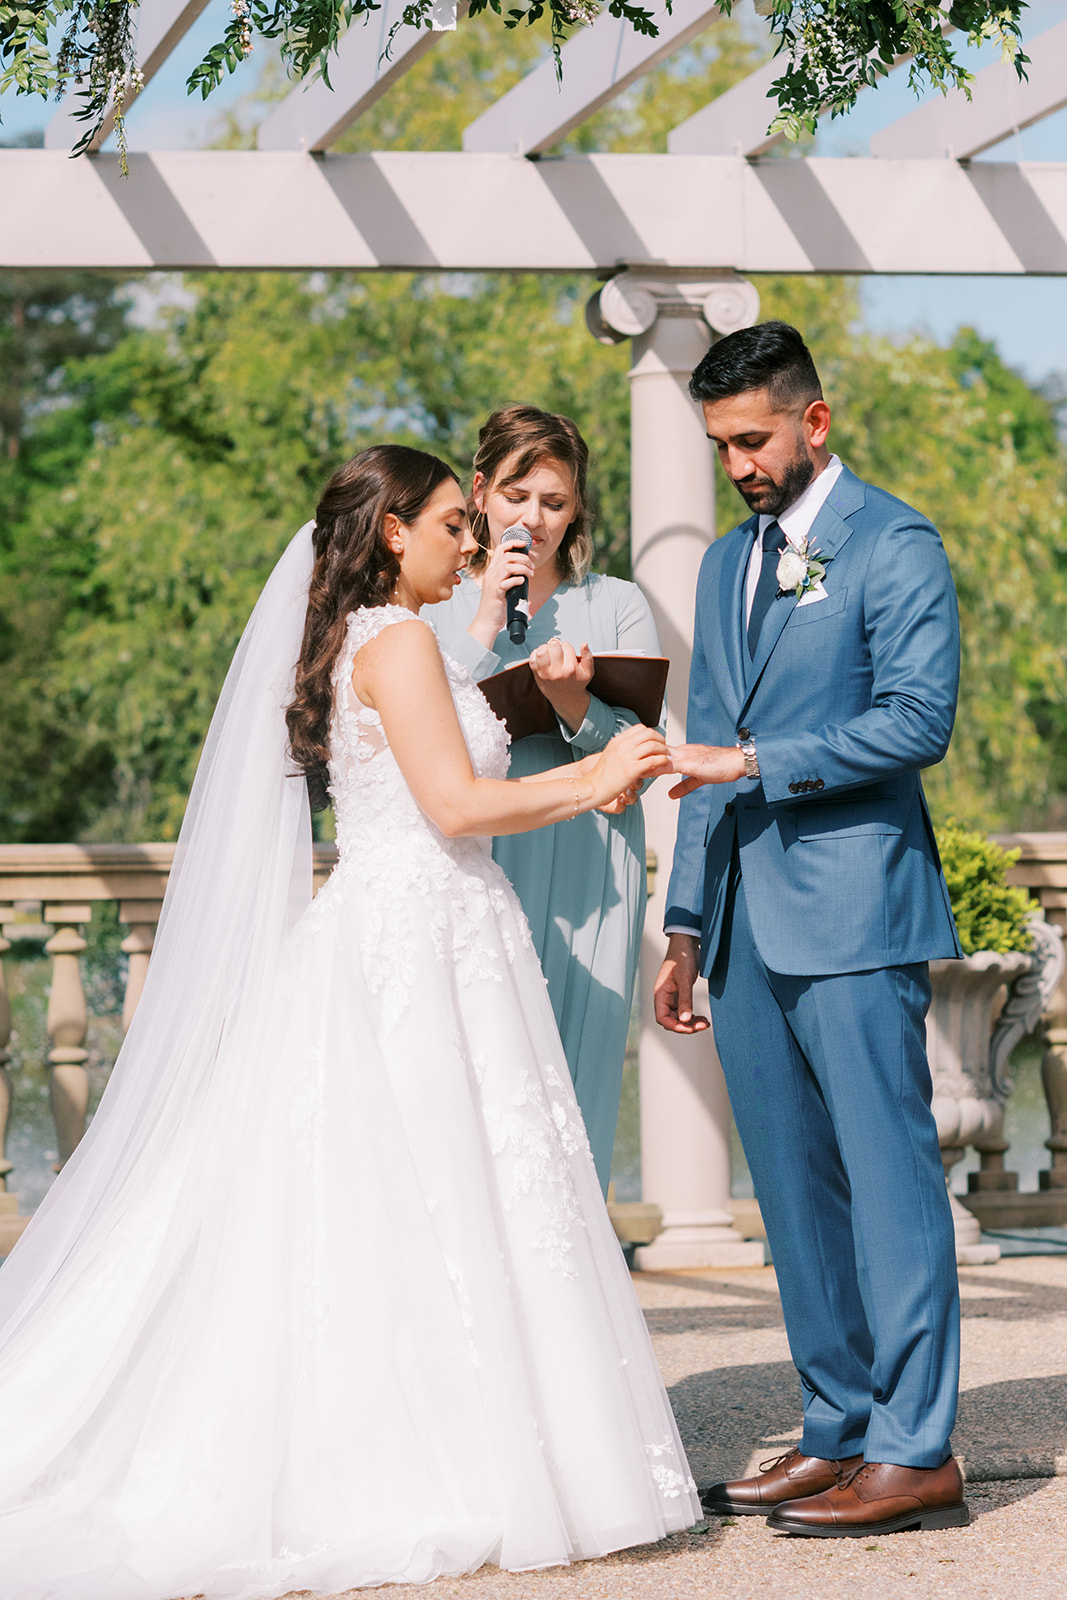 morais vineyard winery virginia bealeton wedding bride and groom putting rings on a line wedding dress blue suit gold 